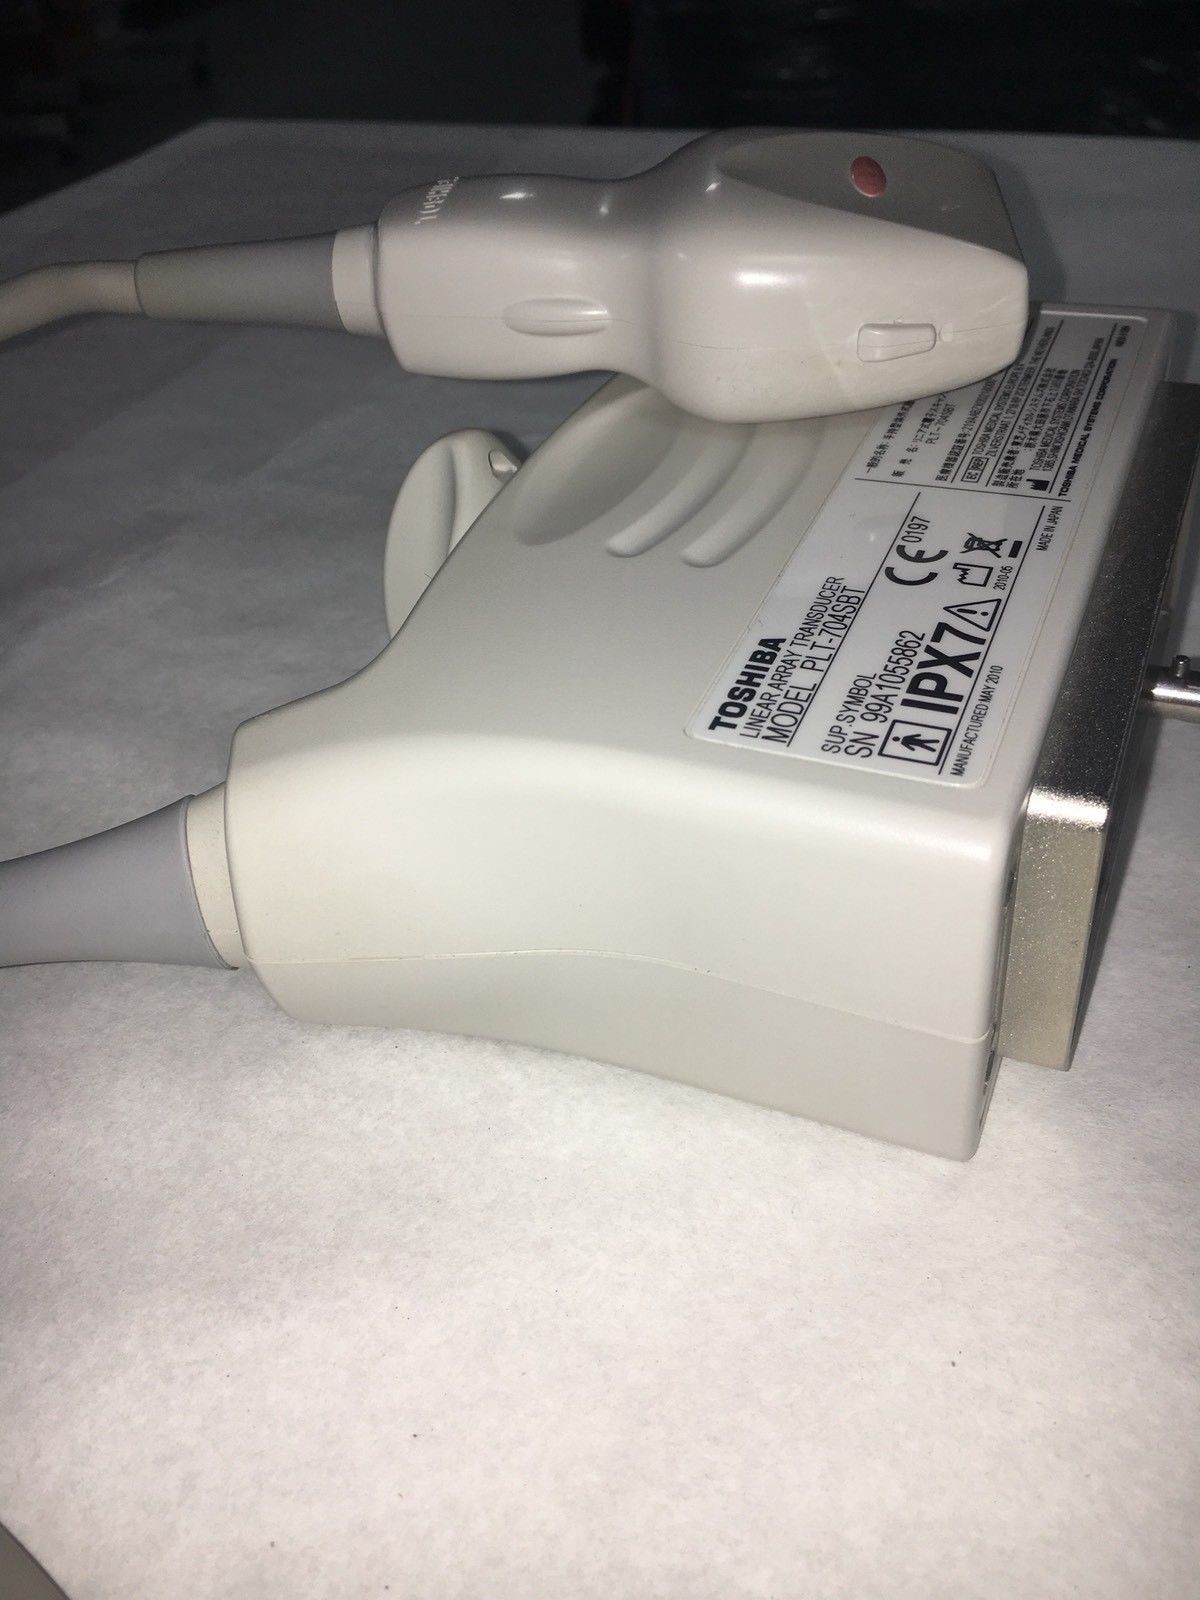 Toshiba Aplio PLT-704SBT Ultrasound Linear Array Vascular Transducer Probe DIAGNOSTIC ULTRASOUND MACHINES FOR SALE